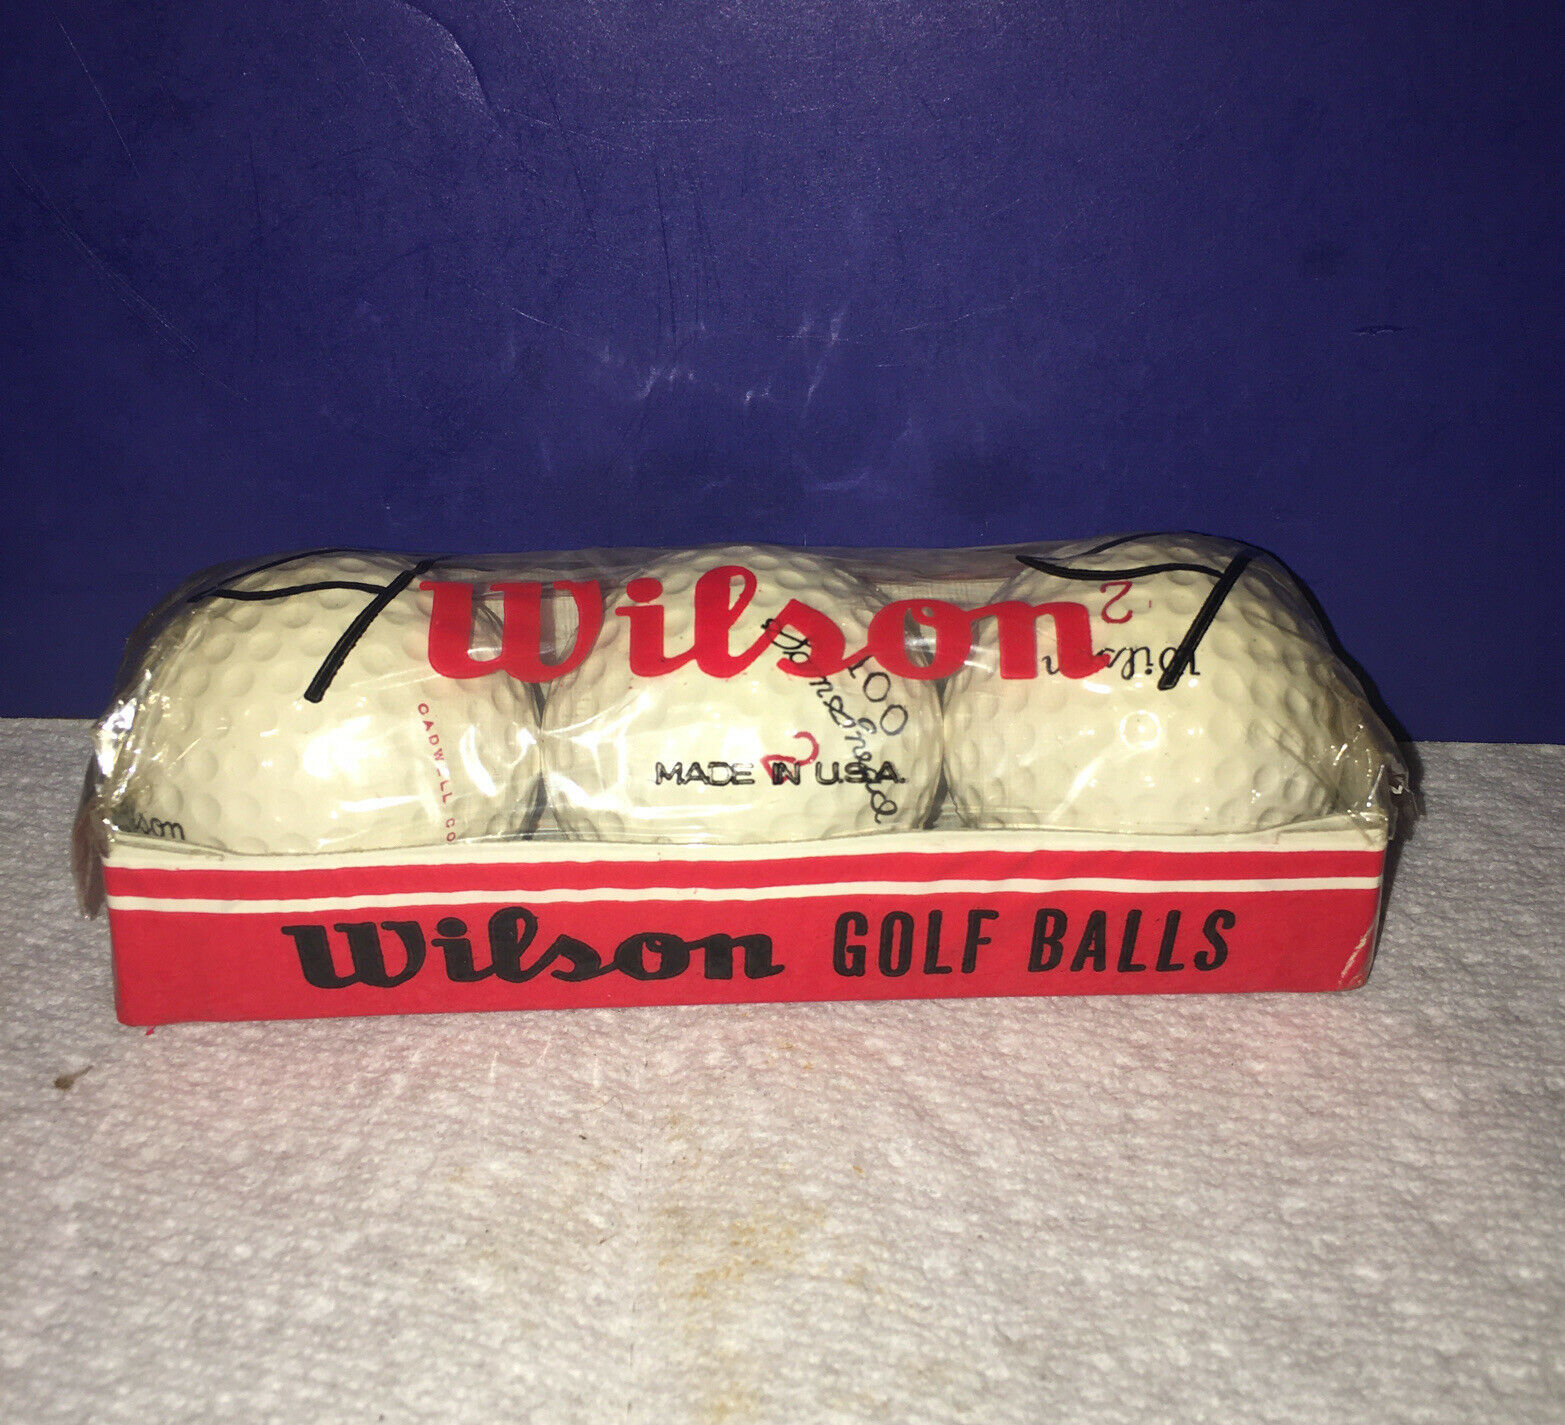 3 Balls- Sam Snead 100 #2 by Wilson Golf Balls -Unopened Sleeves 50's - 60's Era